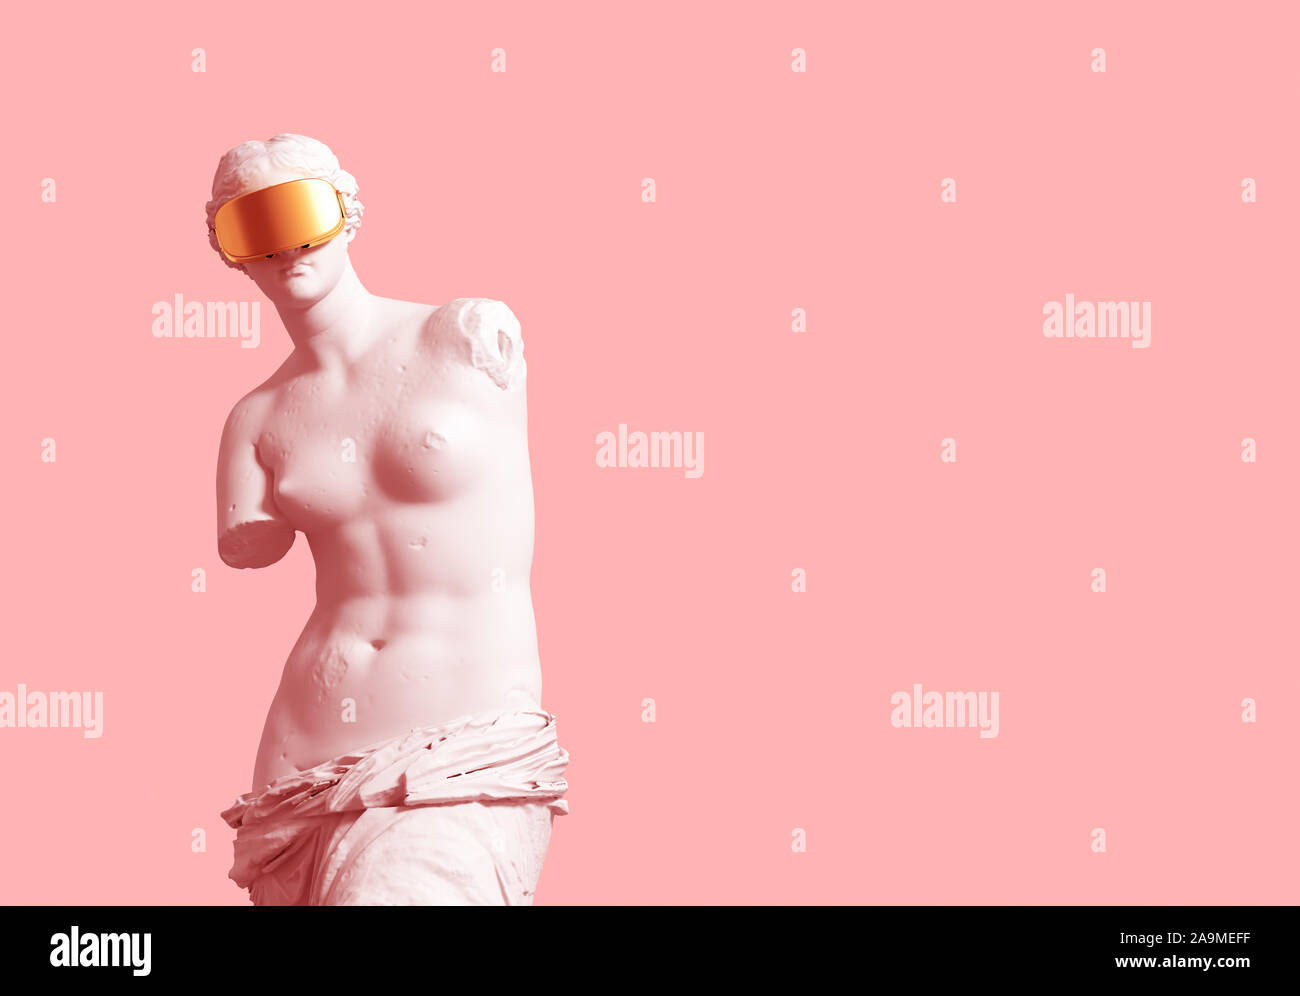 3D Model Aphrodite With Golden VR Glasses On Pink Background. 3D Illustration. Stock Photo